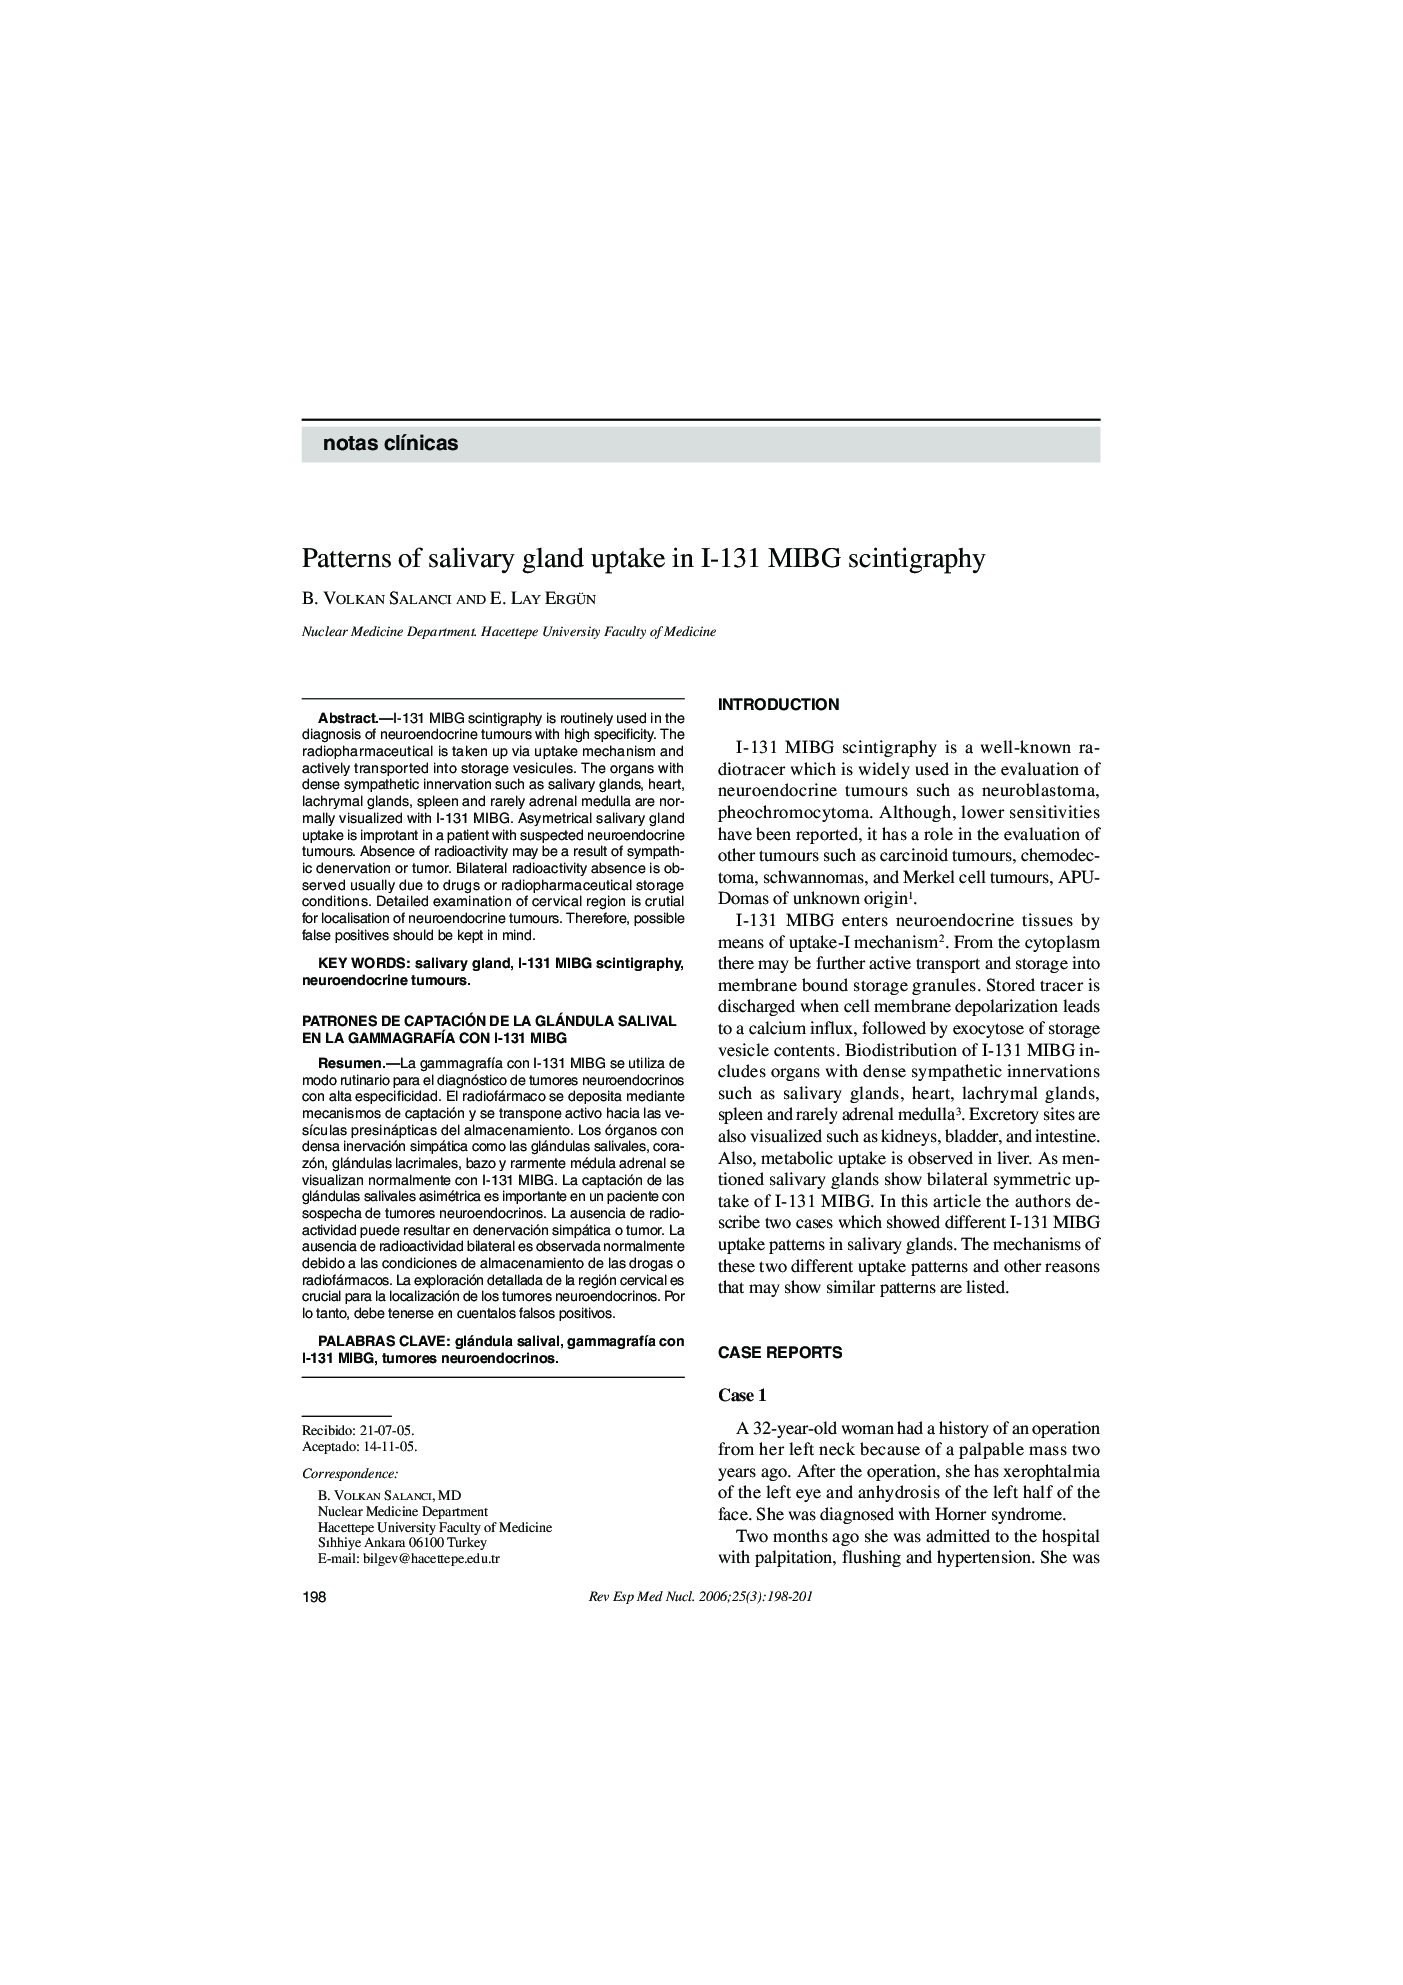 Patterns of salivary gland uptake in I-131 MIBG scintigraphy